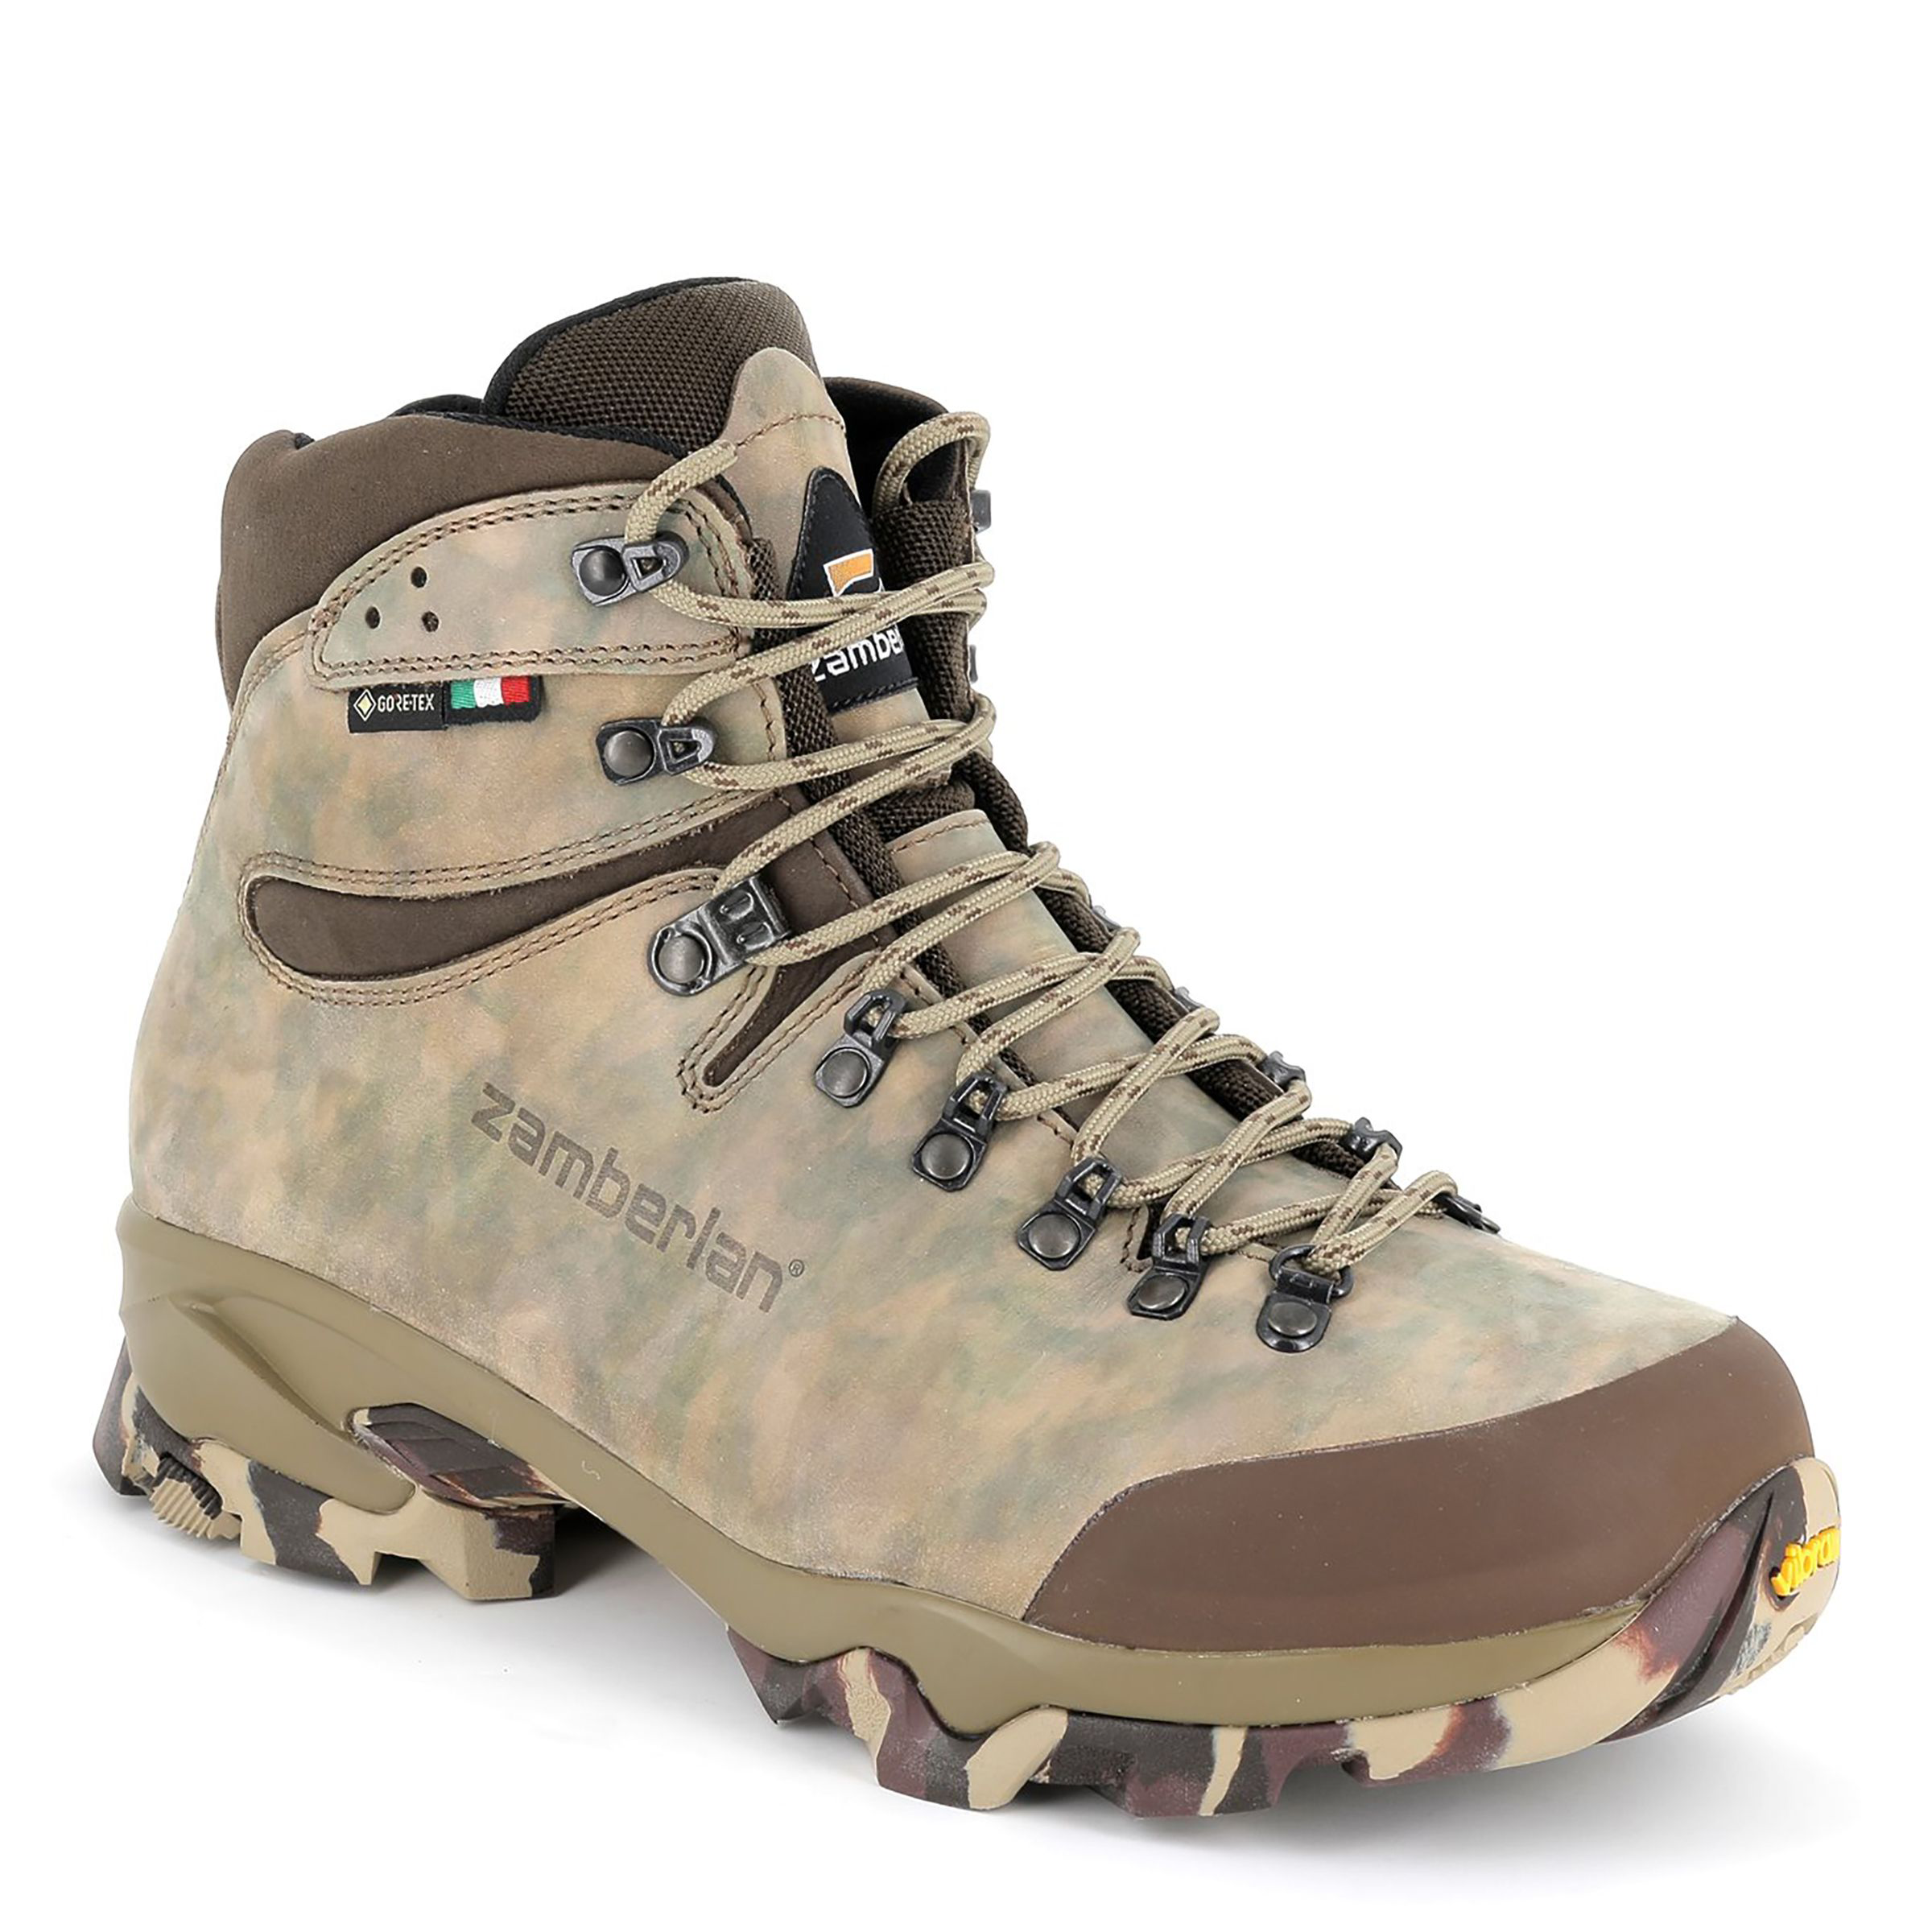 Zamberlan 1213 Leopard GTX RR GORE-TEX Hunting Boots for Men - Beige - 11M